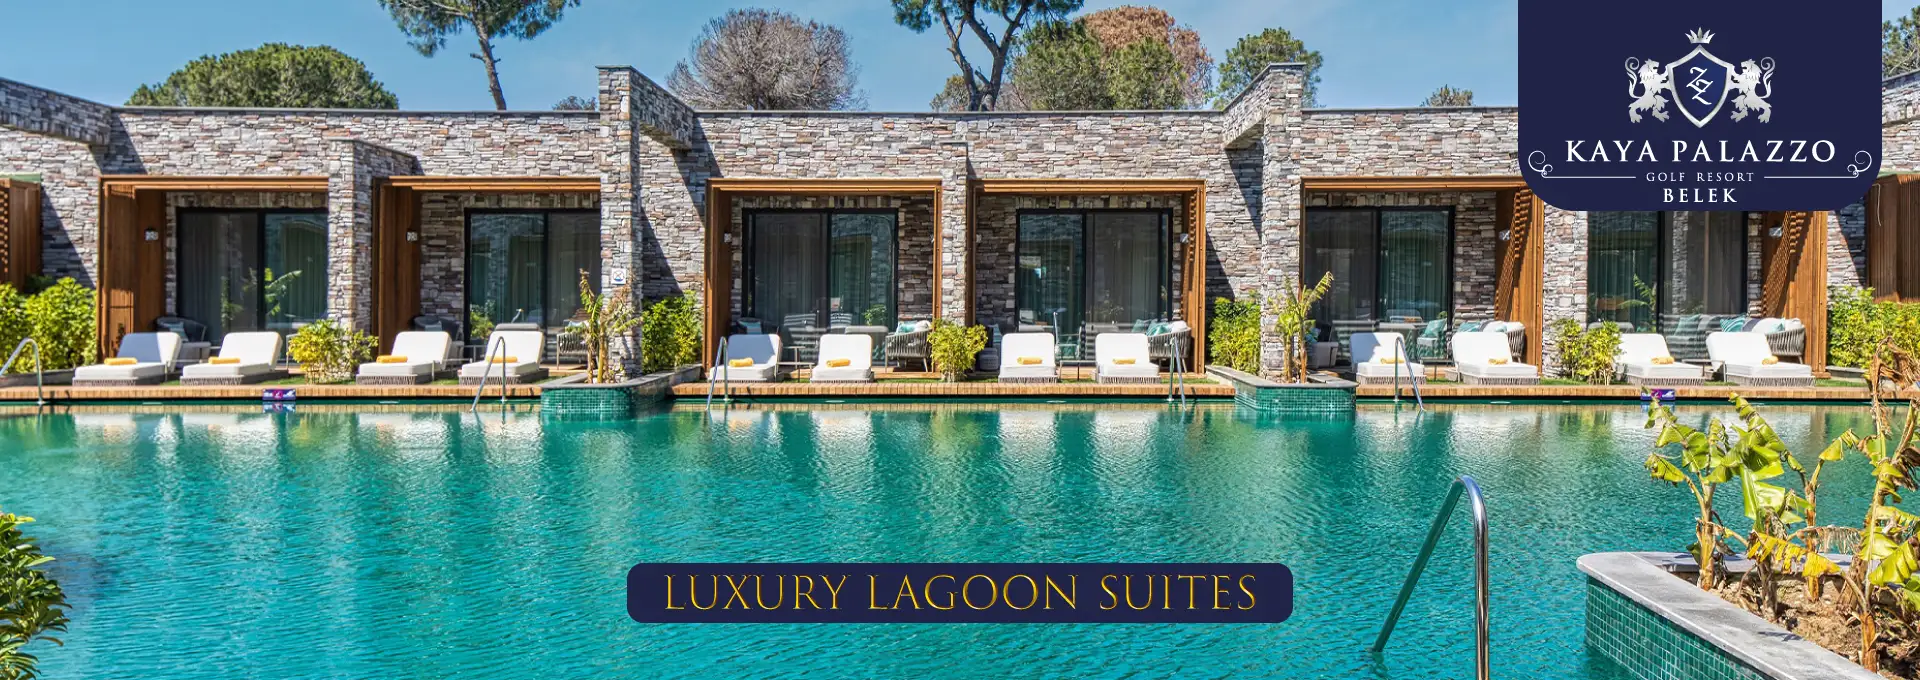 Lagoon suites